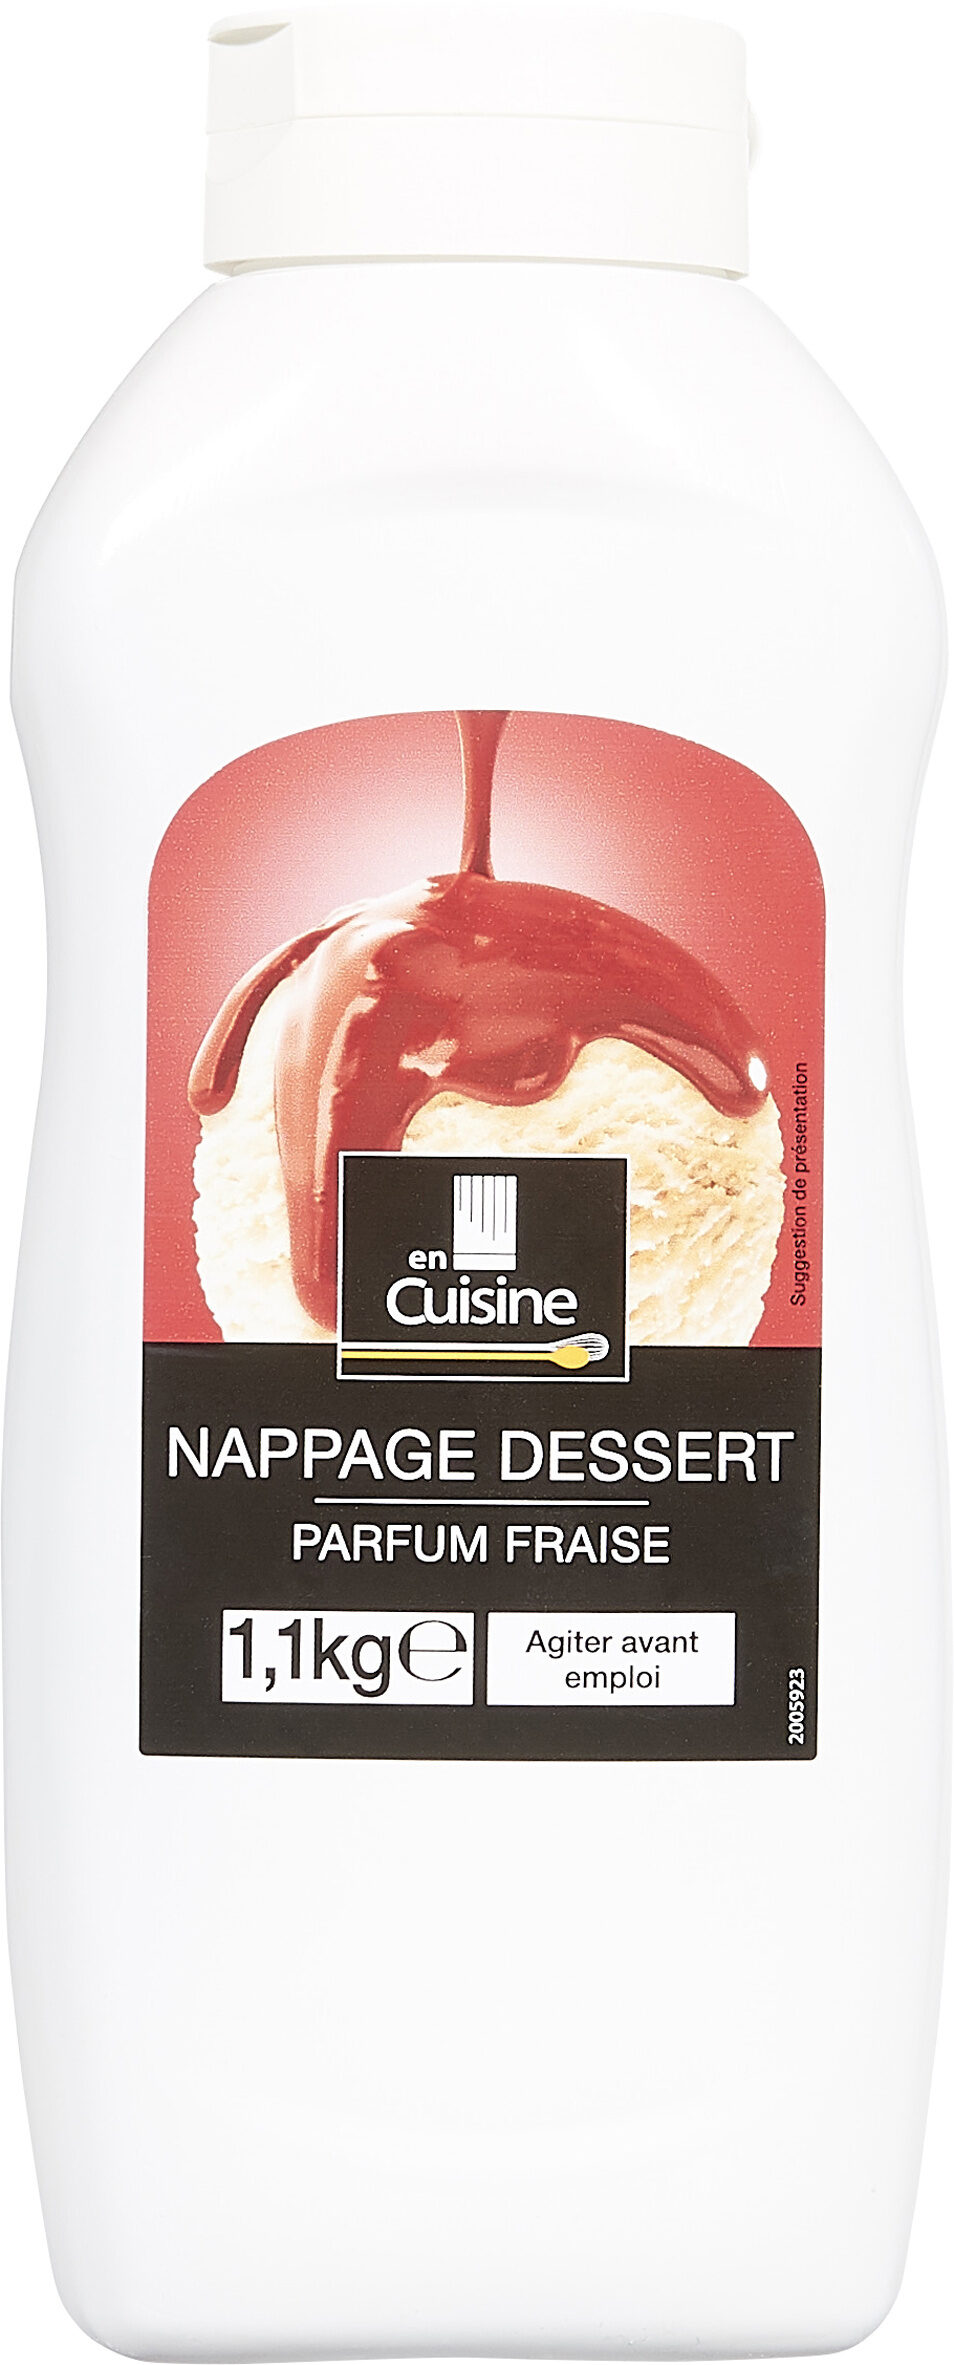 Nappage dessert parfum fraise - Product - fr